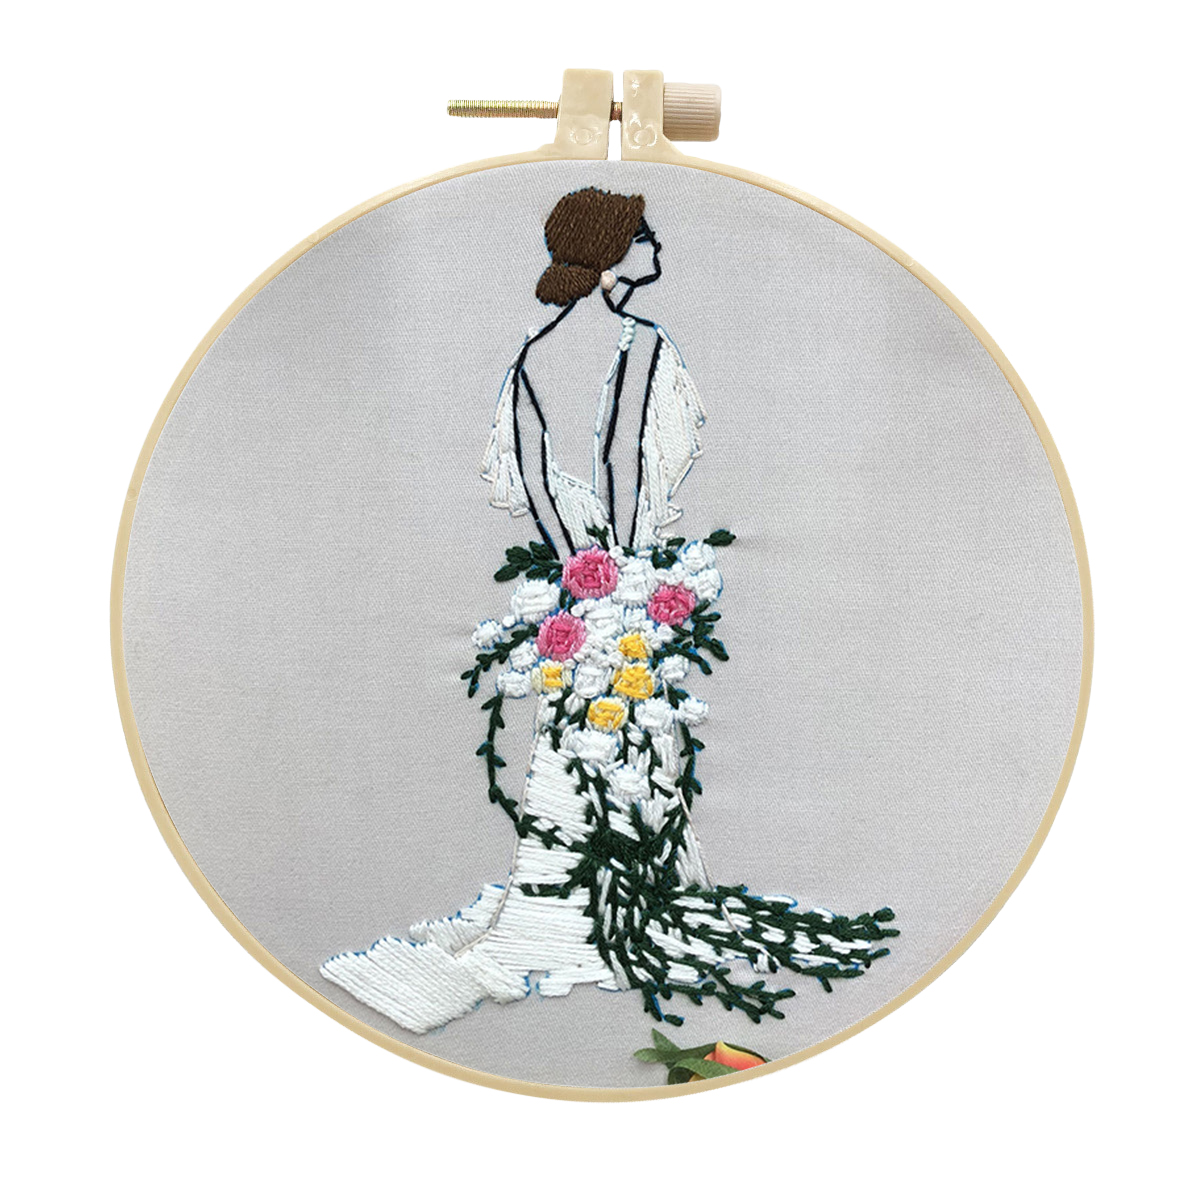 DIY Handmade Embroidery Kit Craft Cross Stitch Kits Beginner - Elegant Girl Pattern